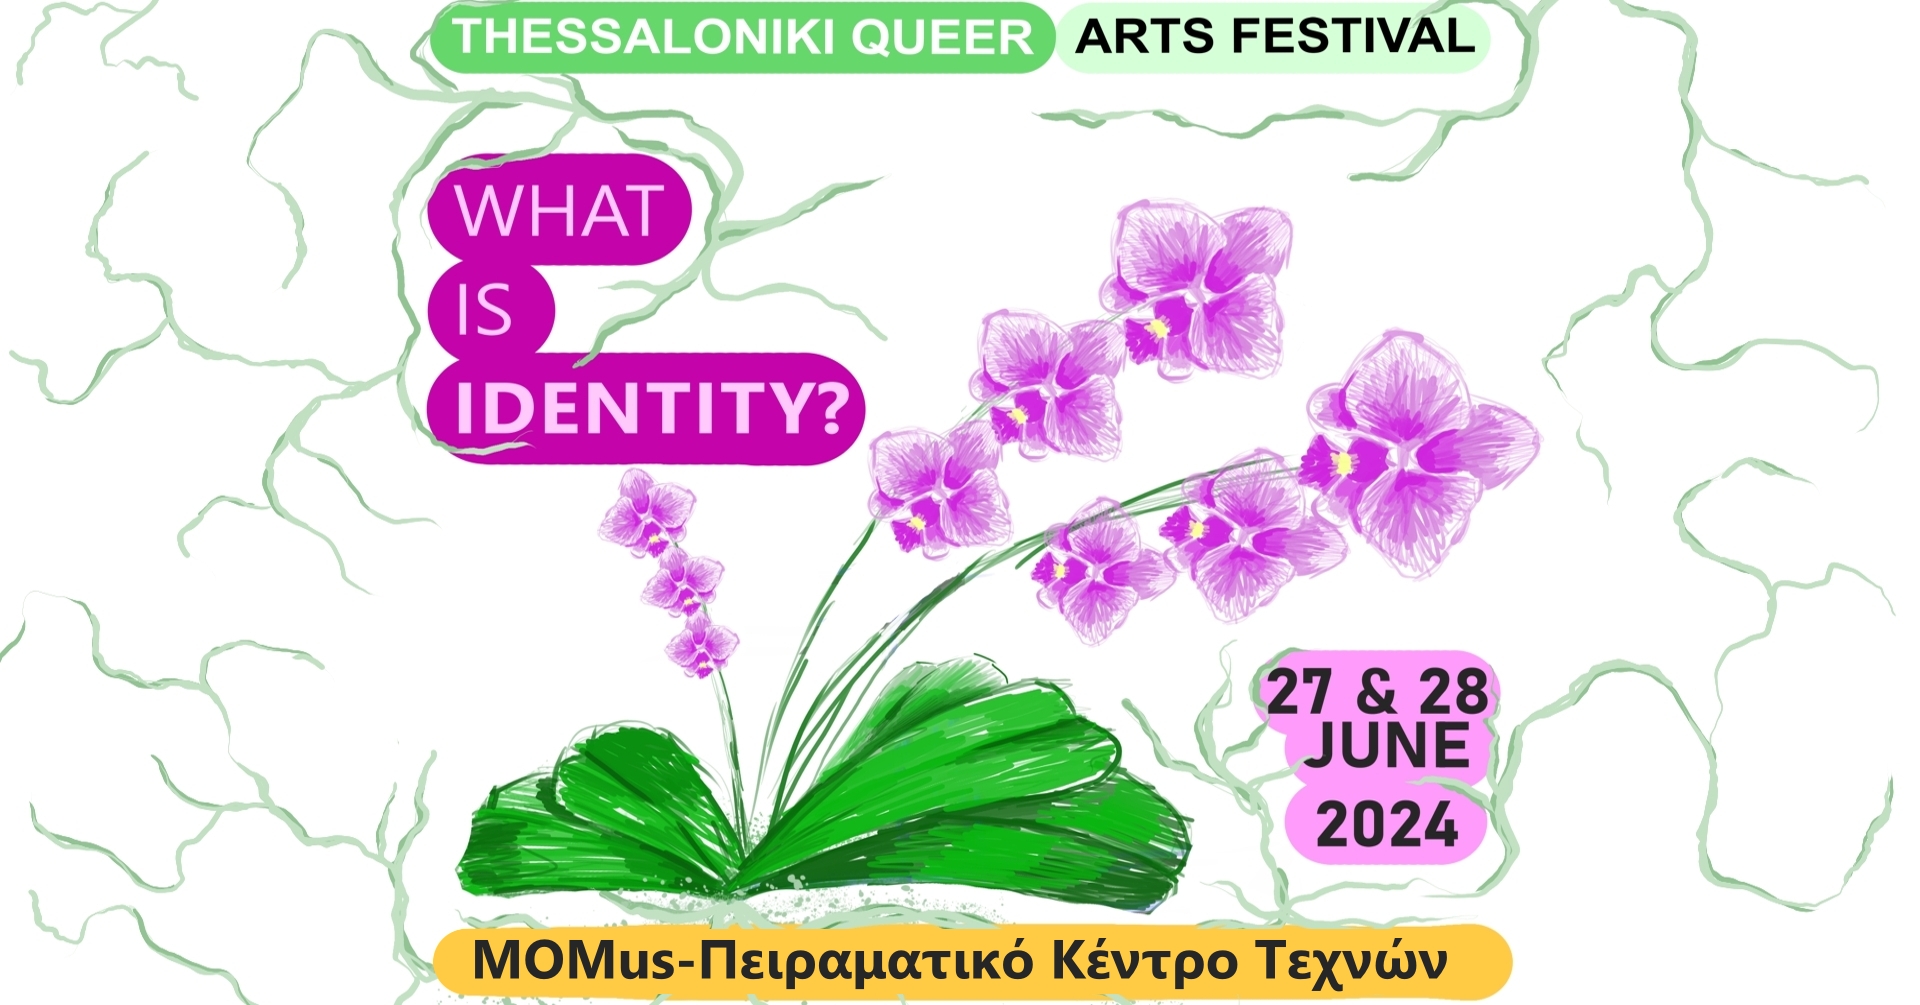 Thessaloniki Queer Arts Festival